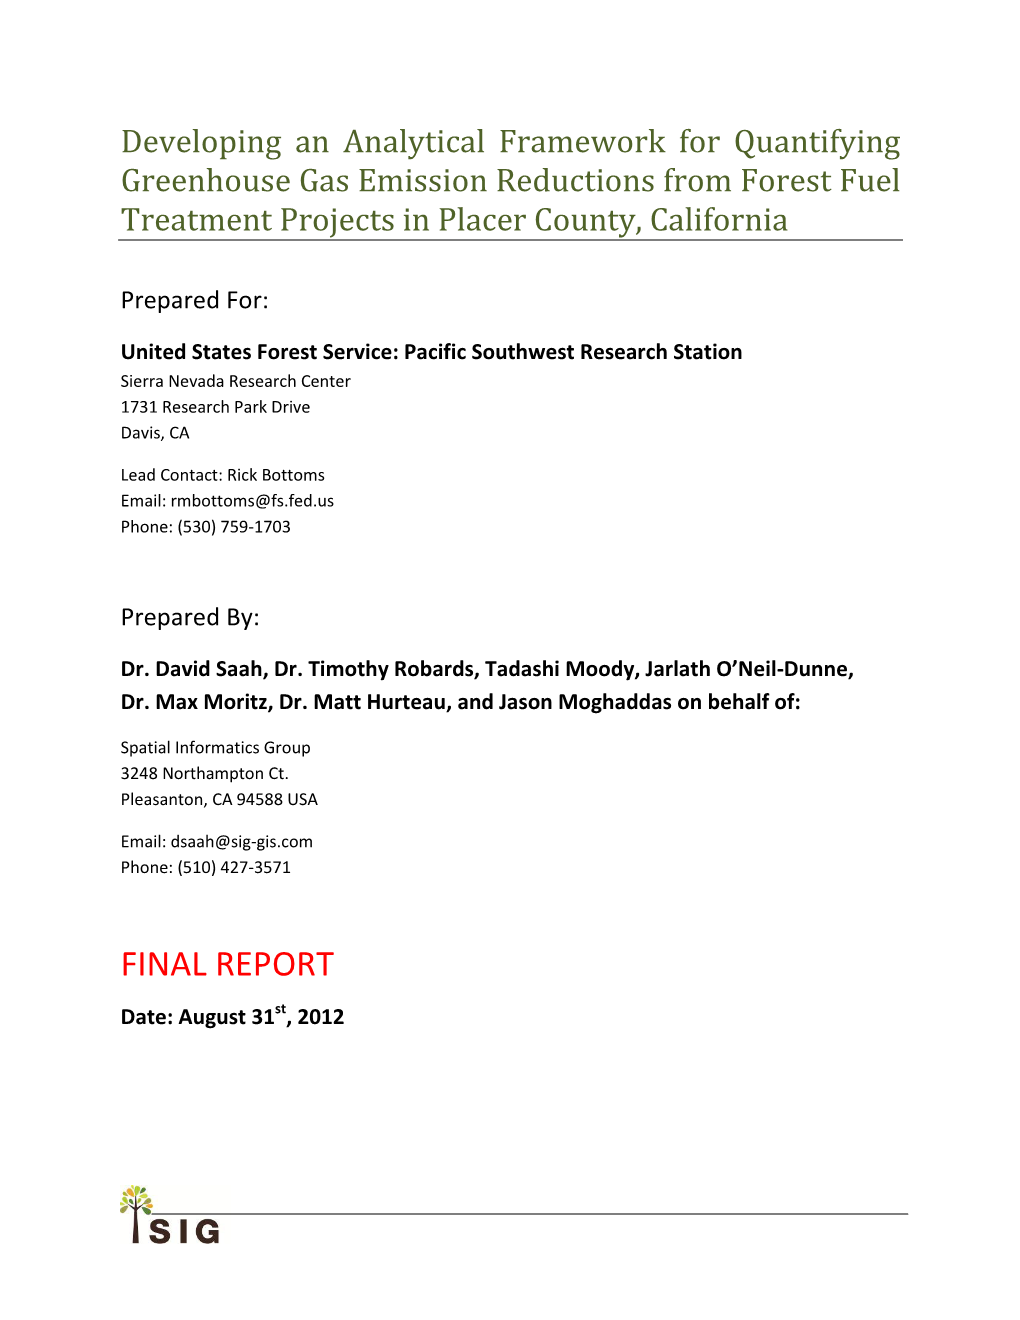 Draft Report (PDF)